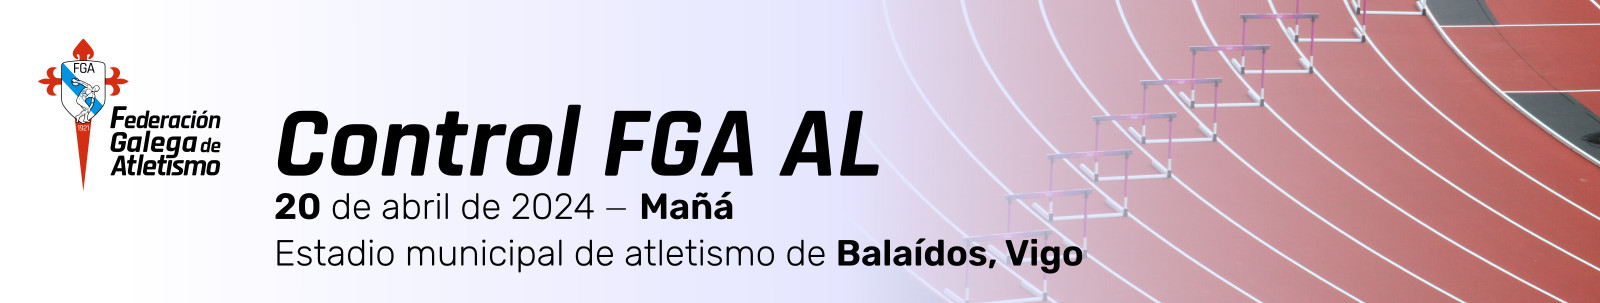  Control FGA AL - Vigo - 20/04/2024 - Mañá.  Estadio Municipal de Atletismo de Balaídos, 20 abril 2024